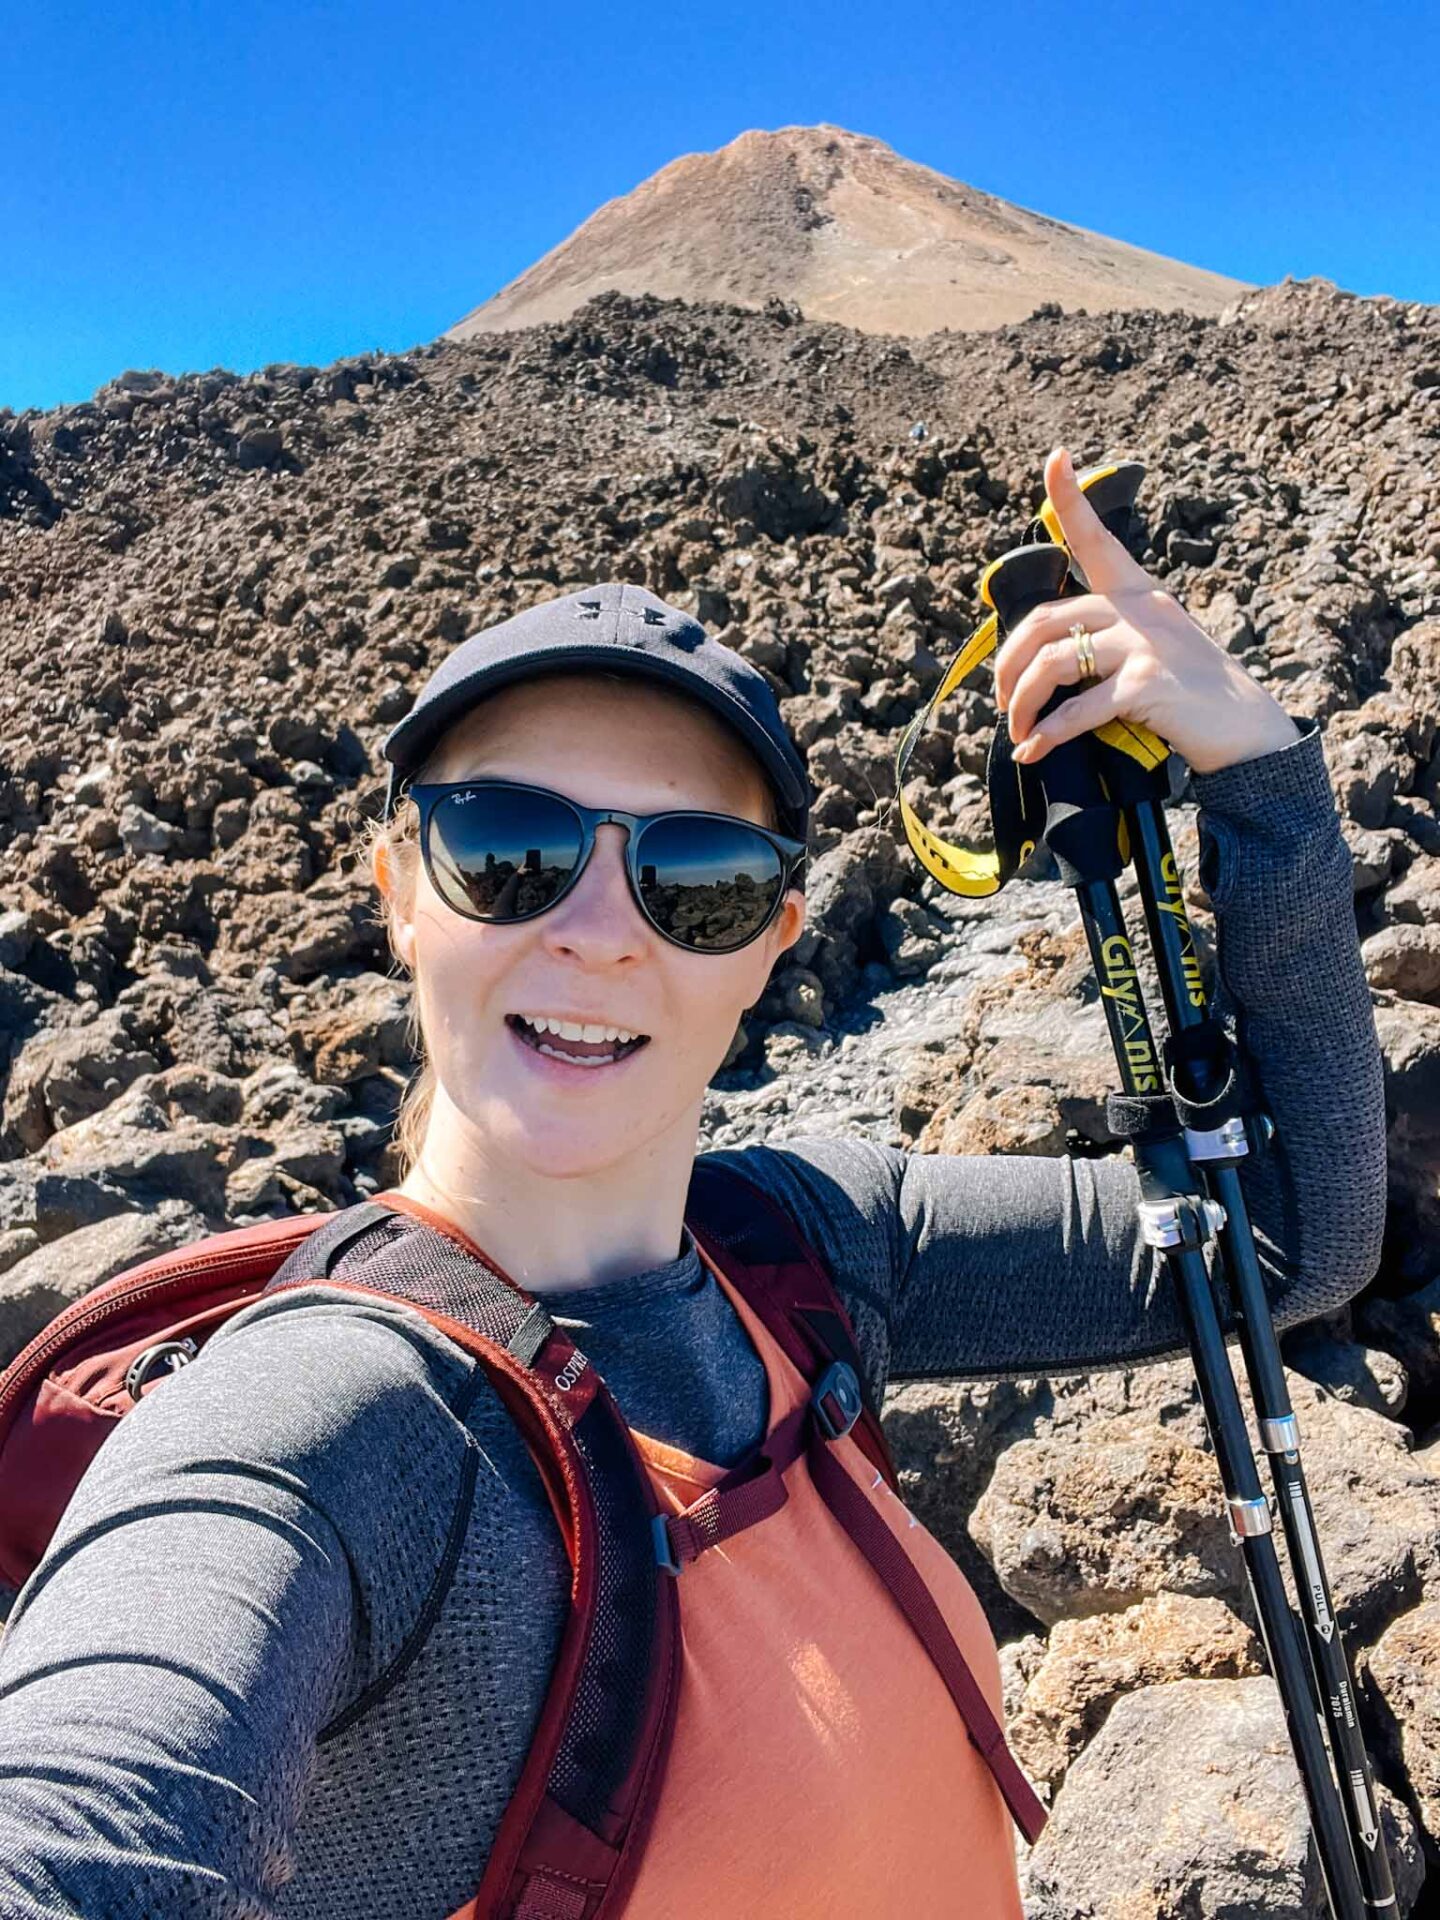 Hiking Mount Teide, Ellie pointing to top of Mount Teide